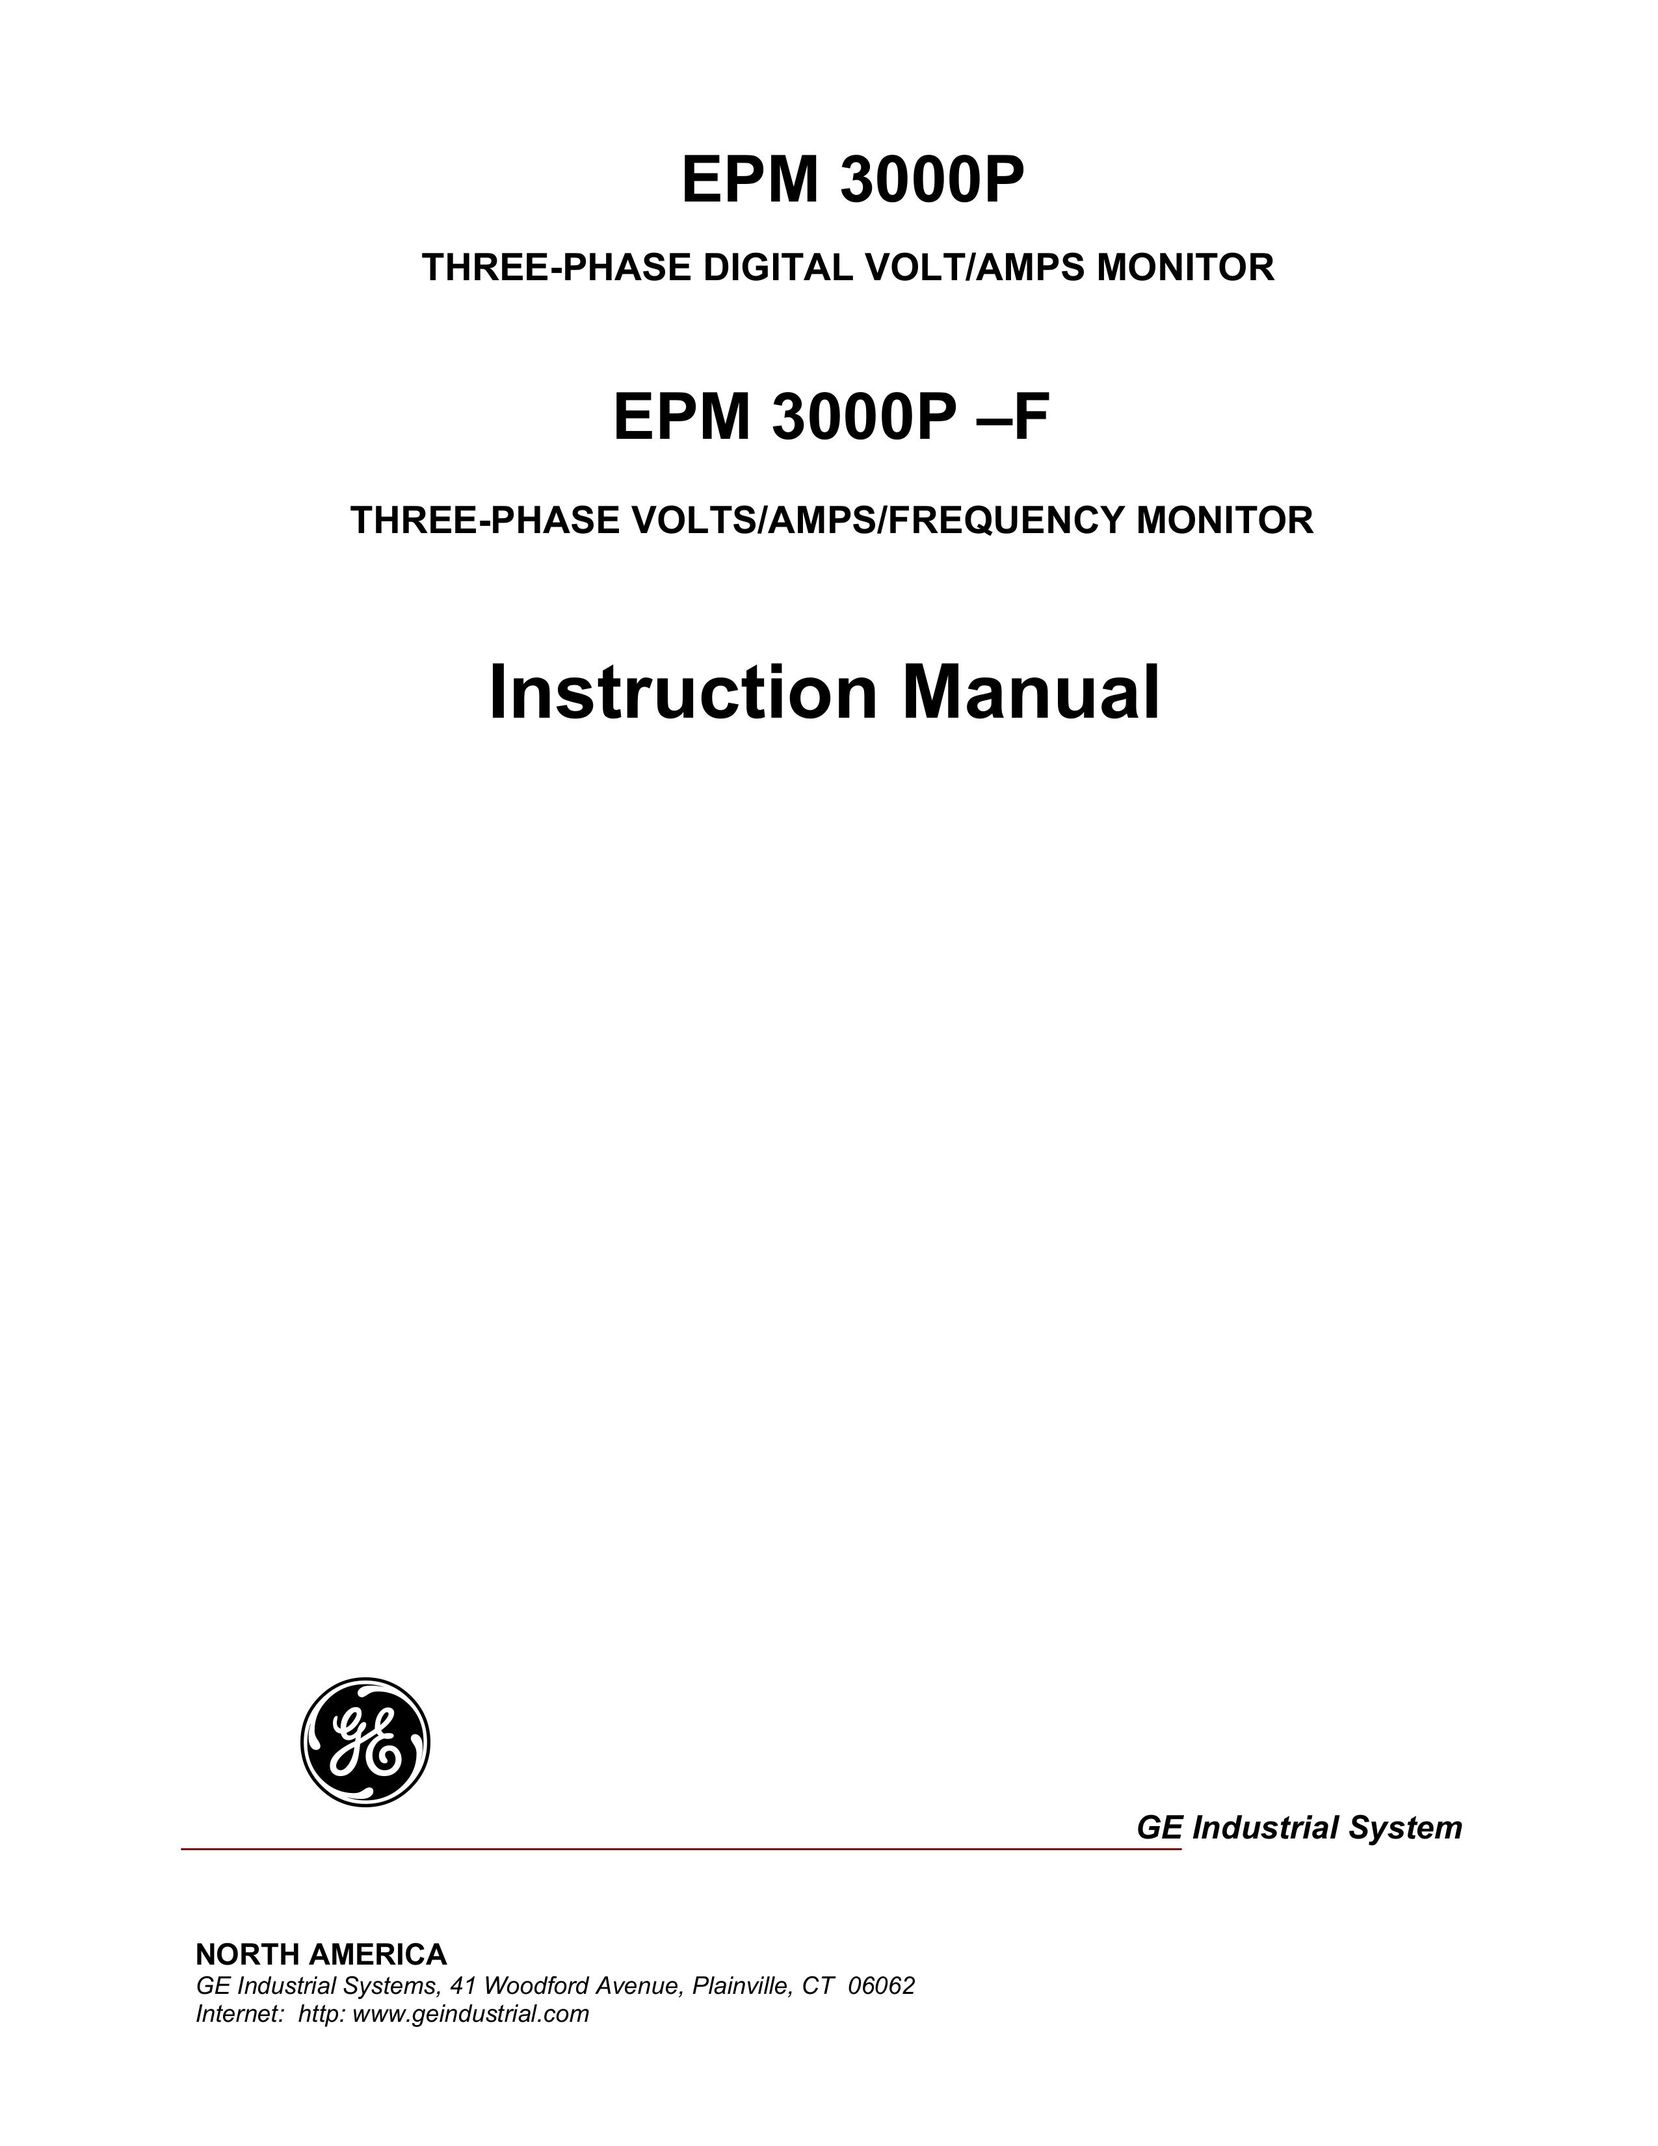 GE EPM 3000P MP3 Player User Manual